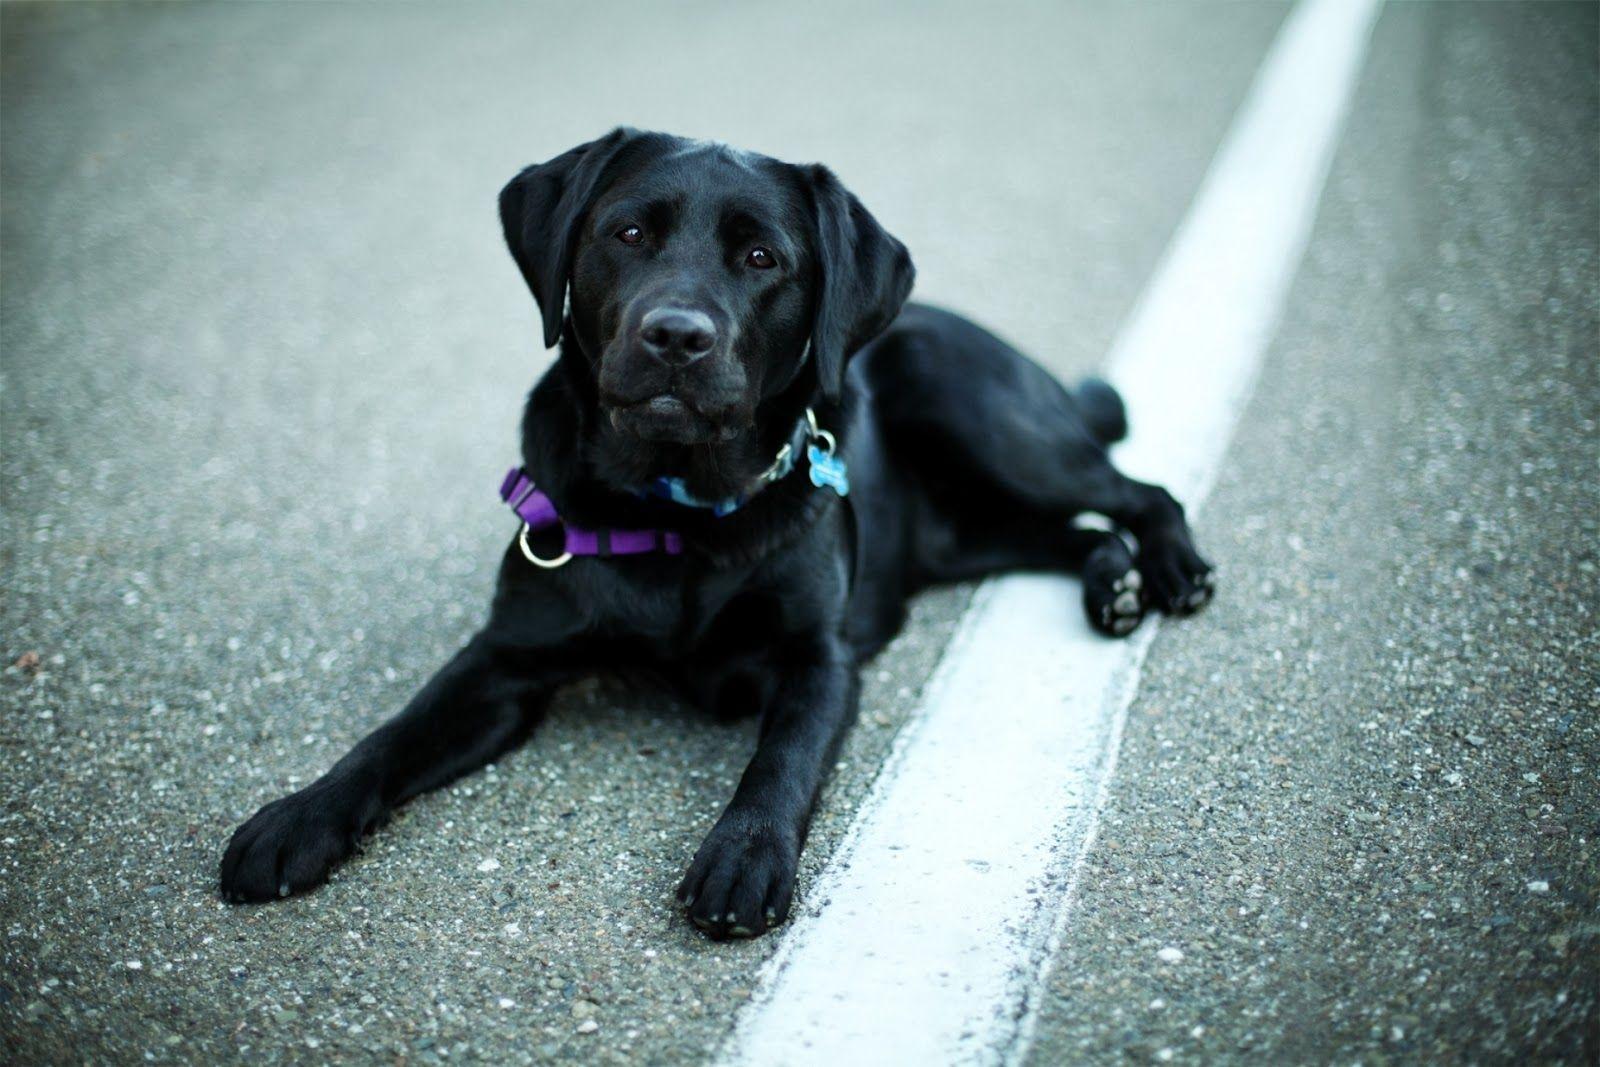 Black Labrador Retriever Wallpaper and Facts. Pet Care Tips